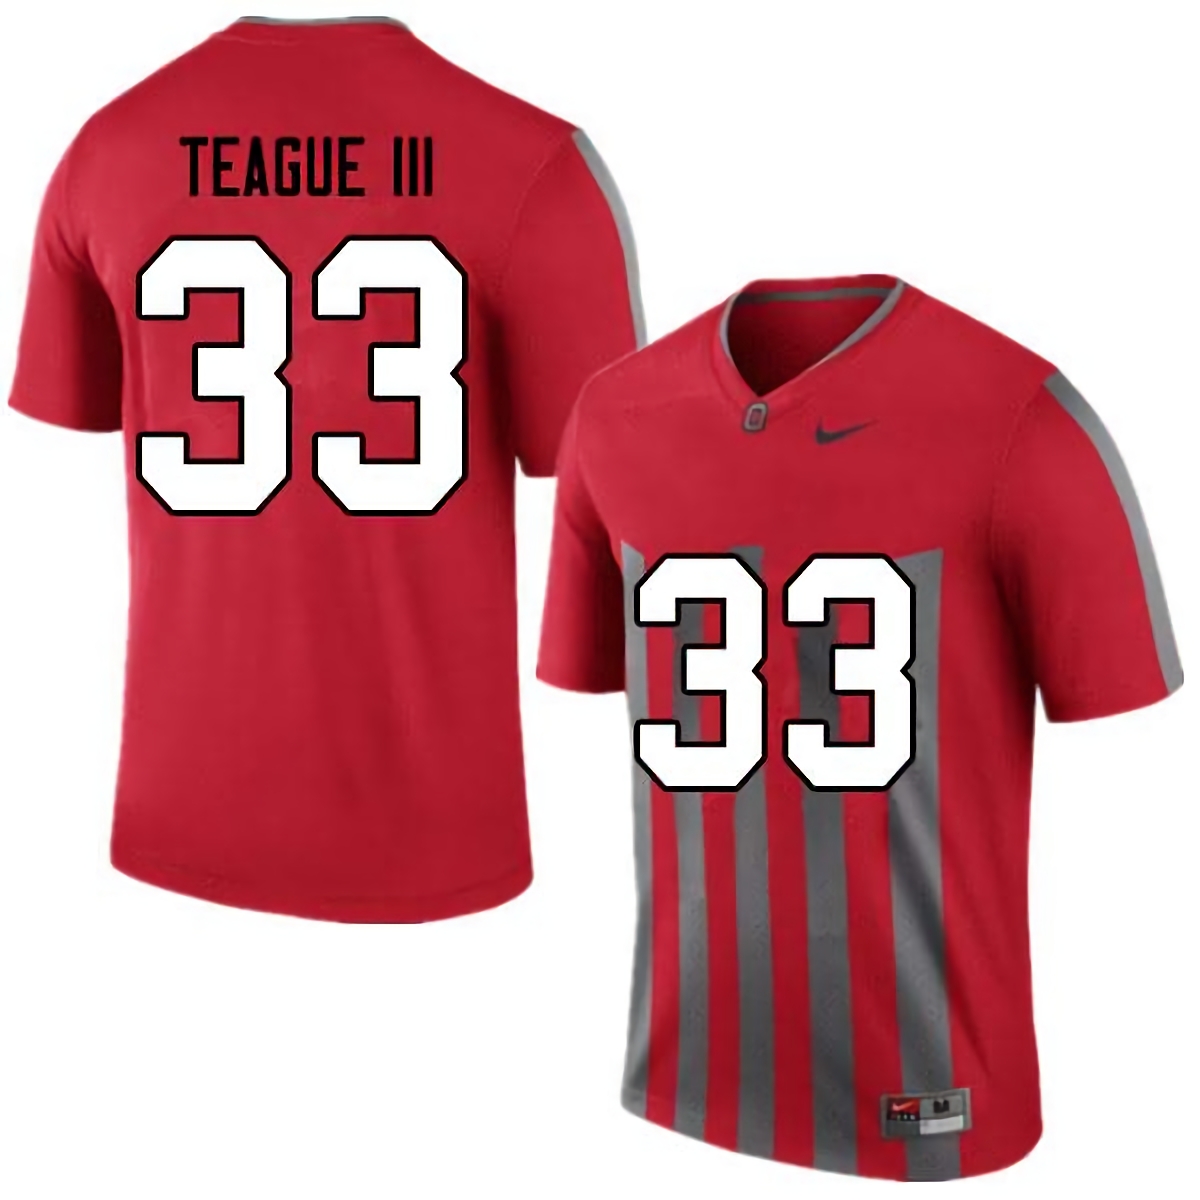 Master Teague III Ohio State Buckeyes Men's NCAA #33 Nike Retro College Stitched Football Jersey DZP2456ZO